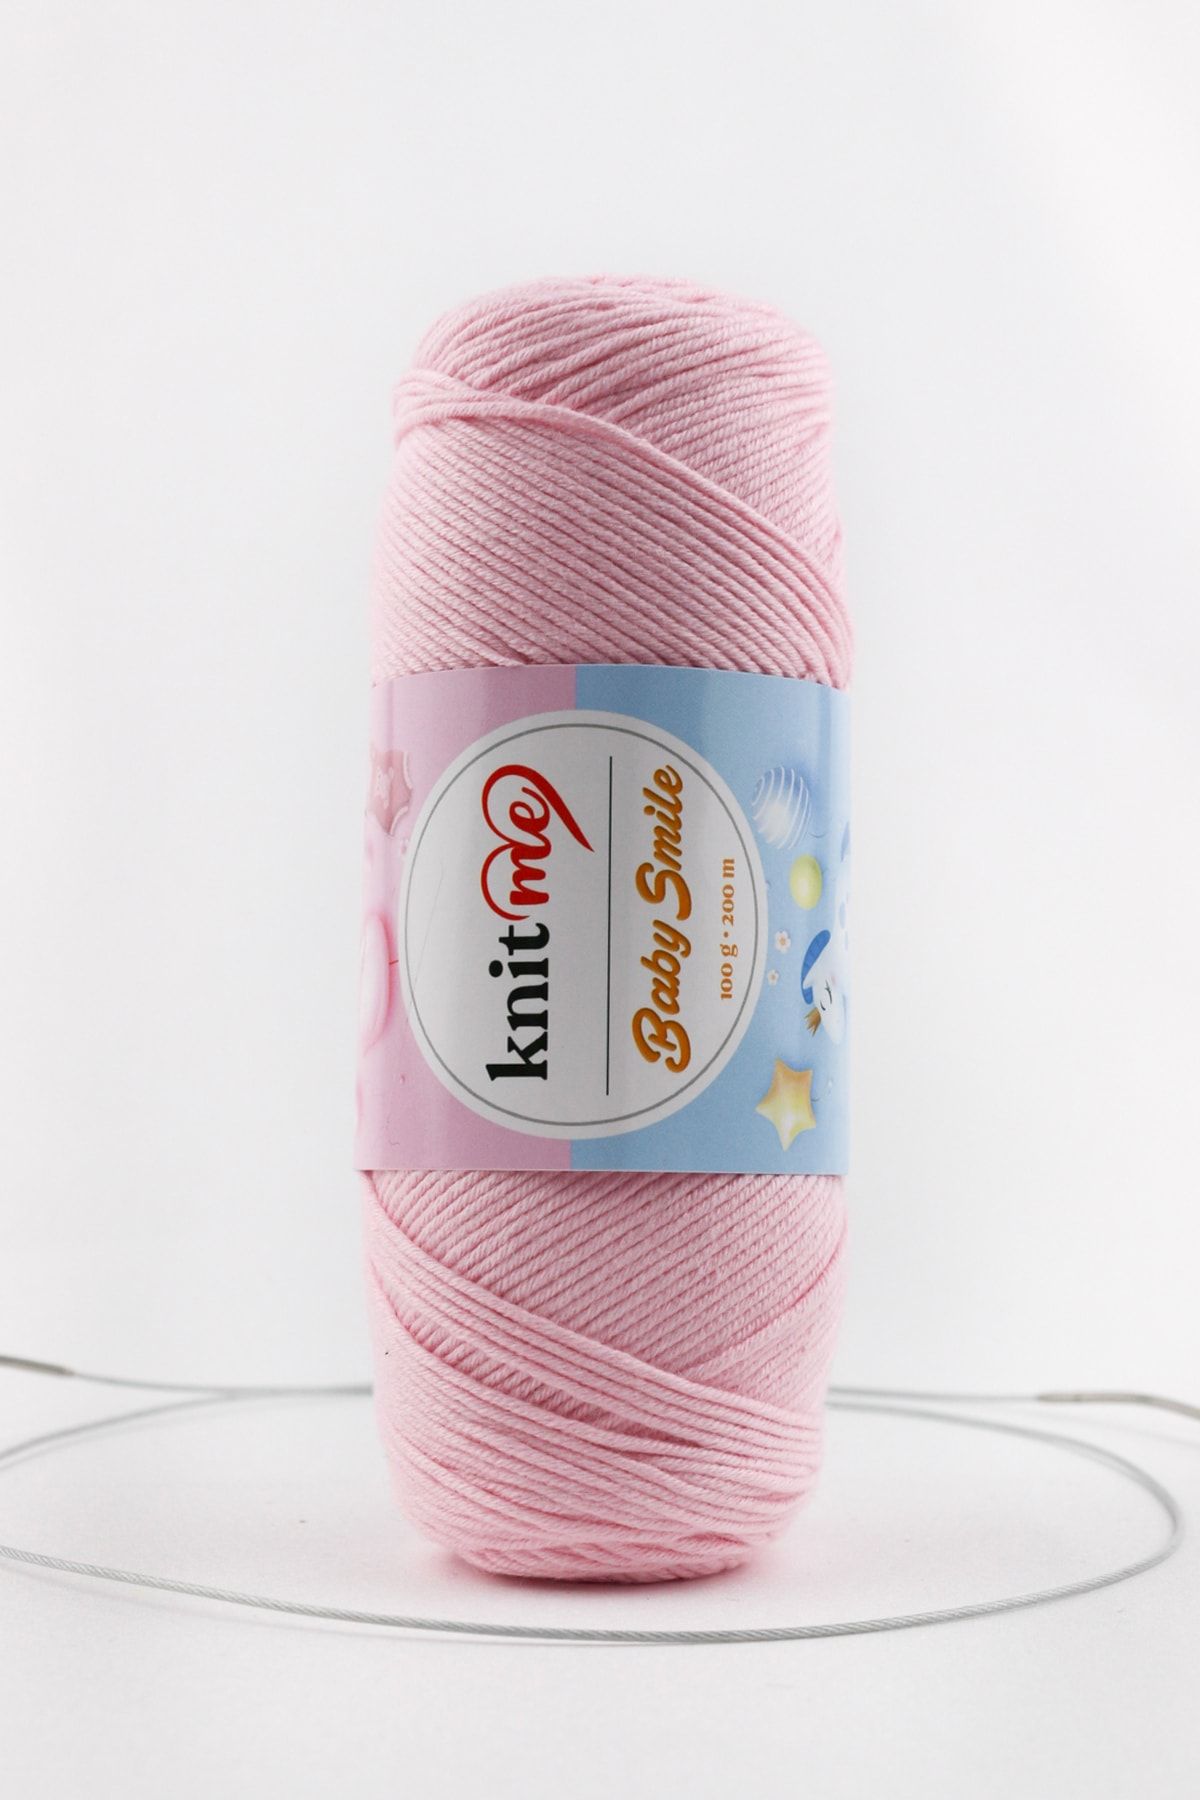 knitme Baby Smıle 100 Gr Bebek El Örgü Ipligi Taka Yarn (022)